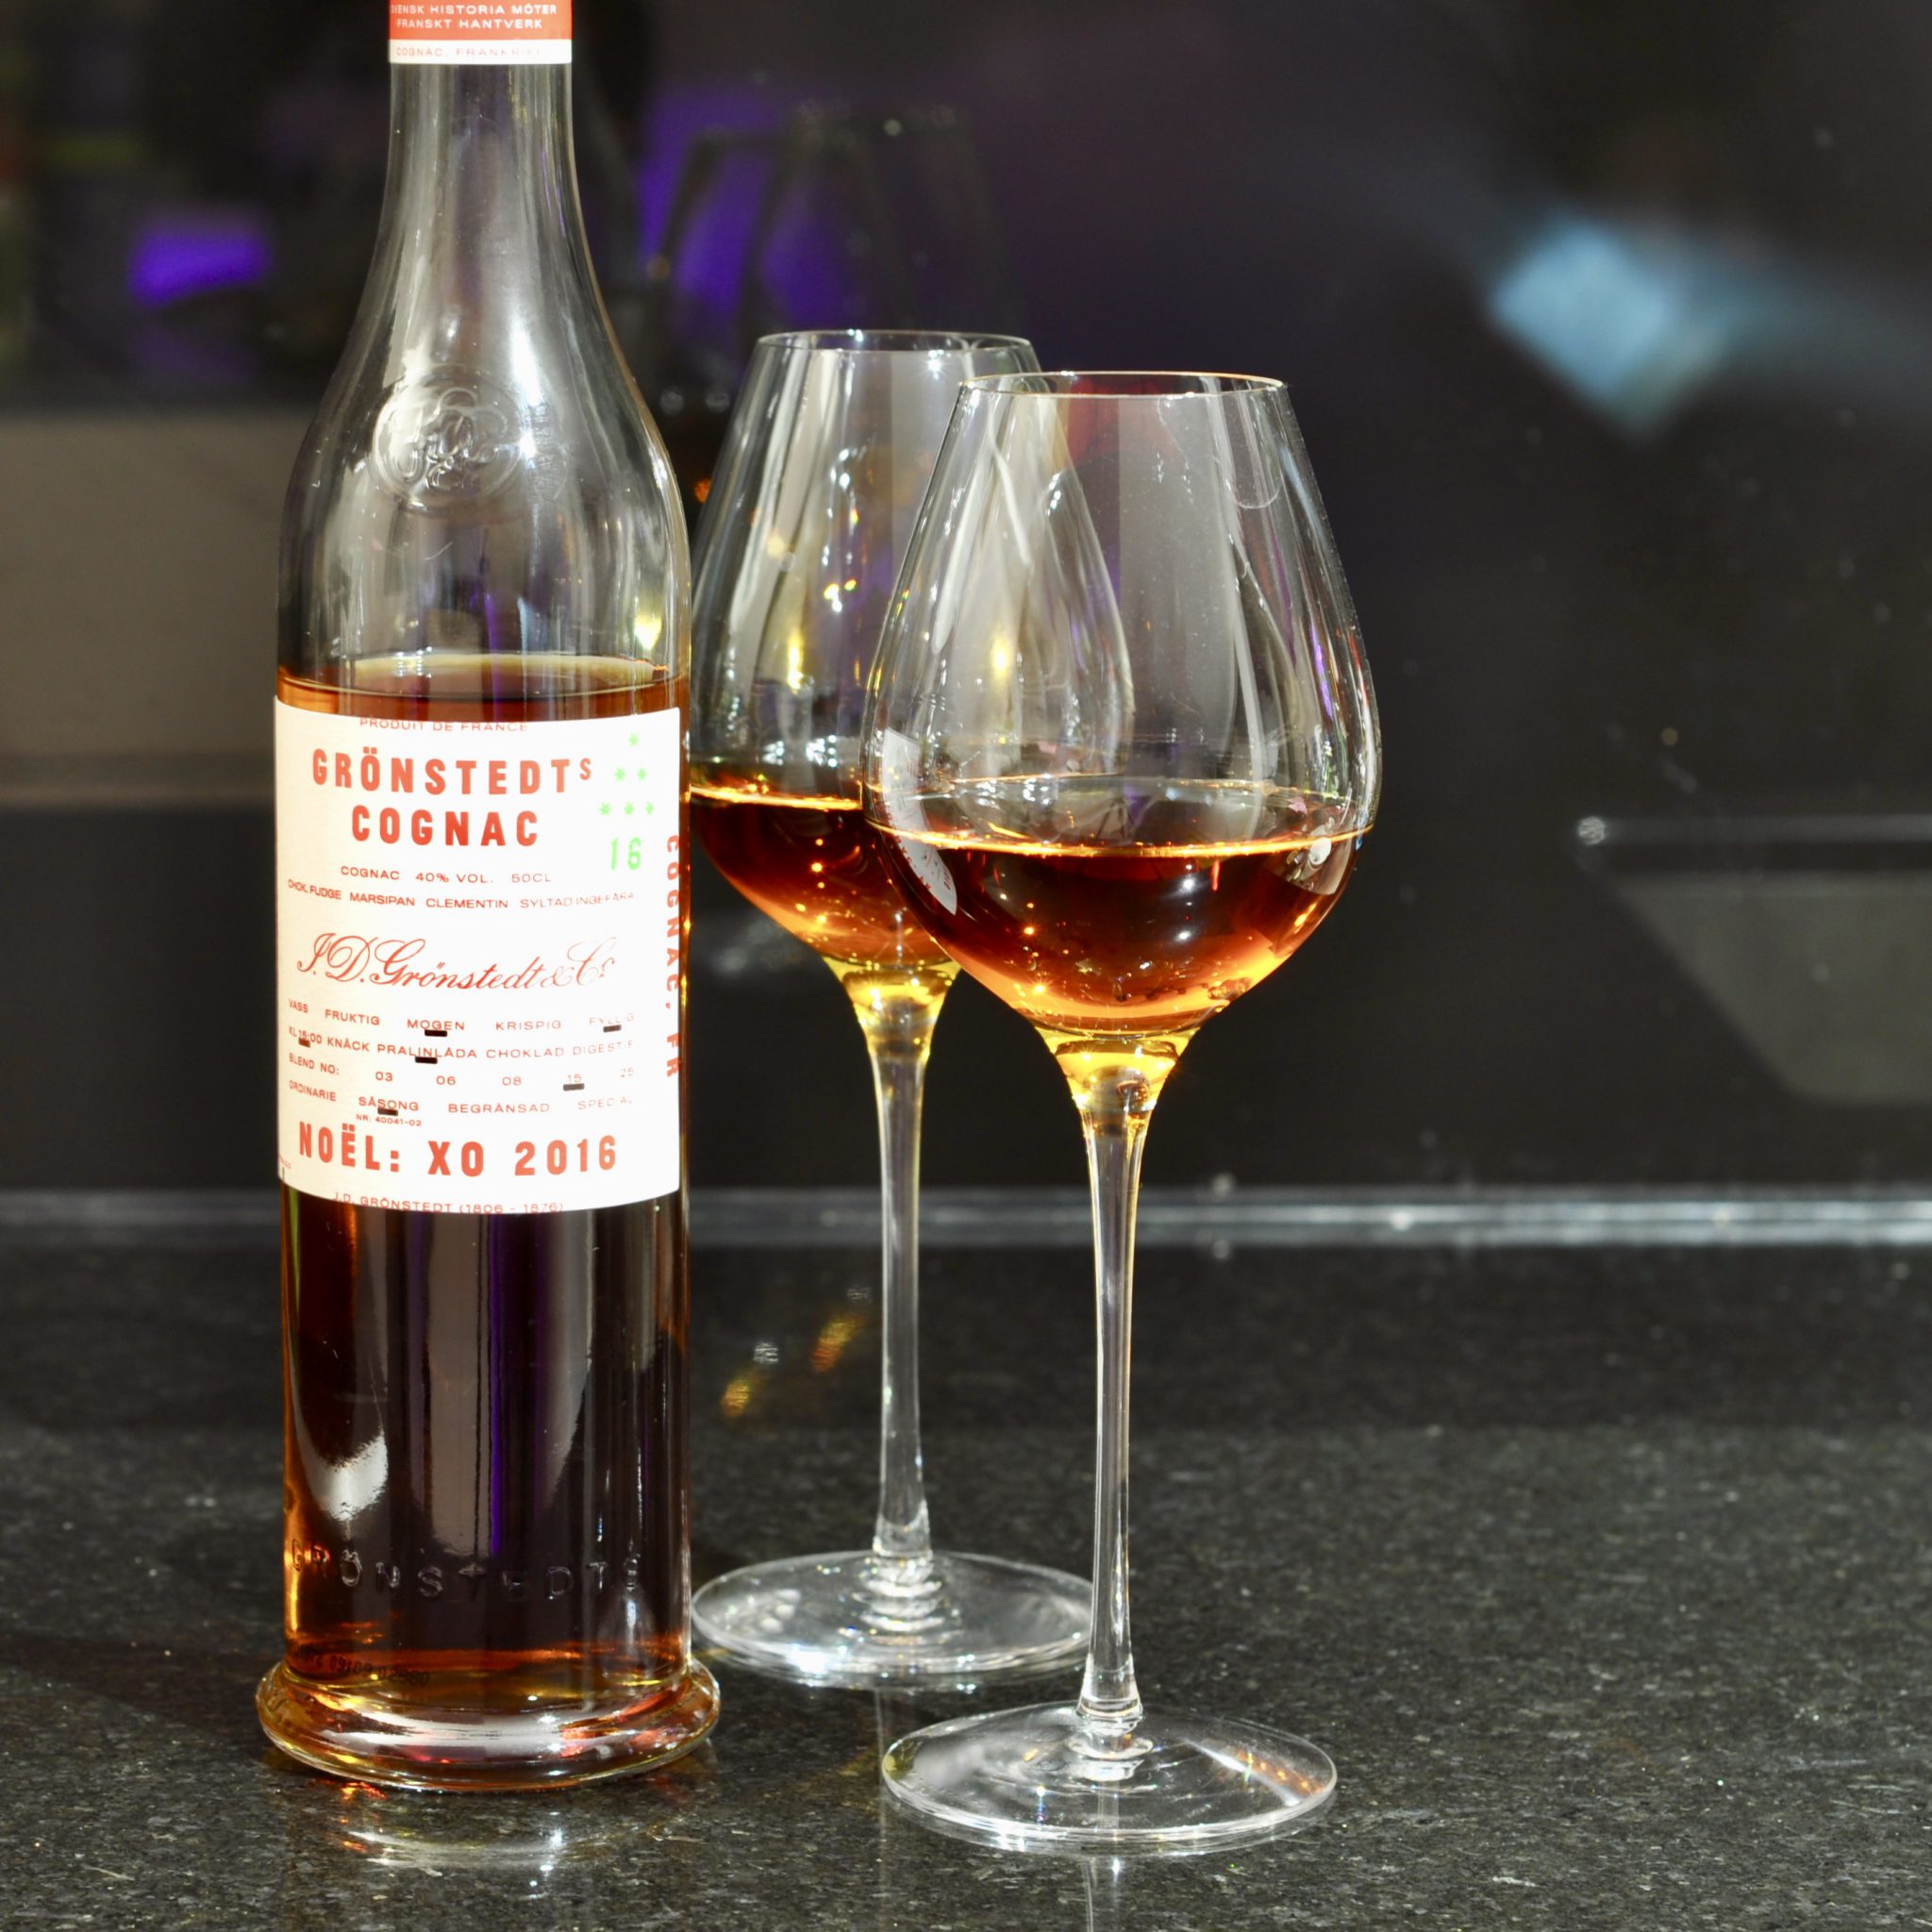 Grönstedts Cognac